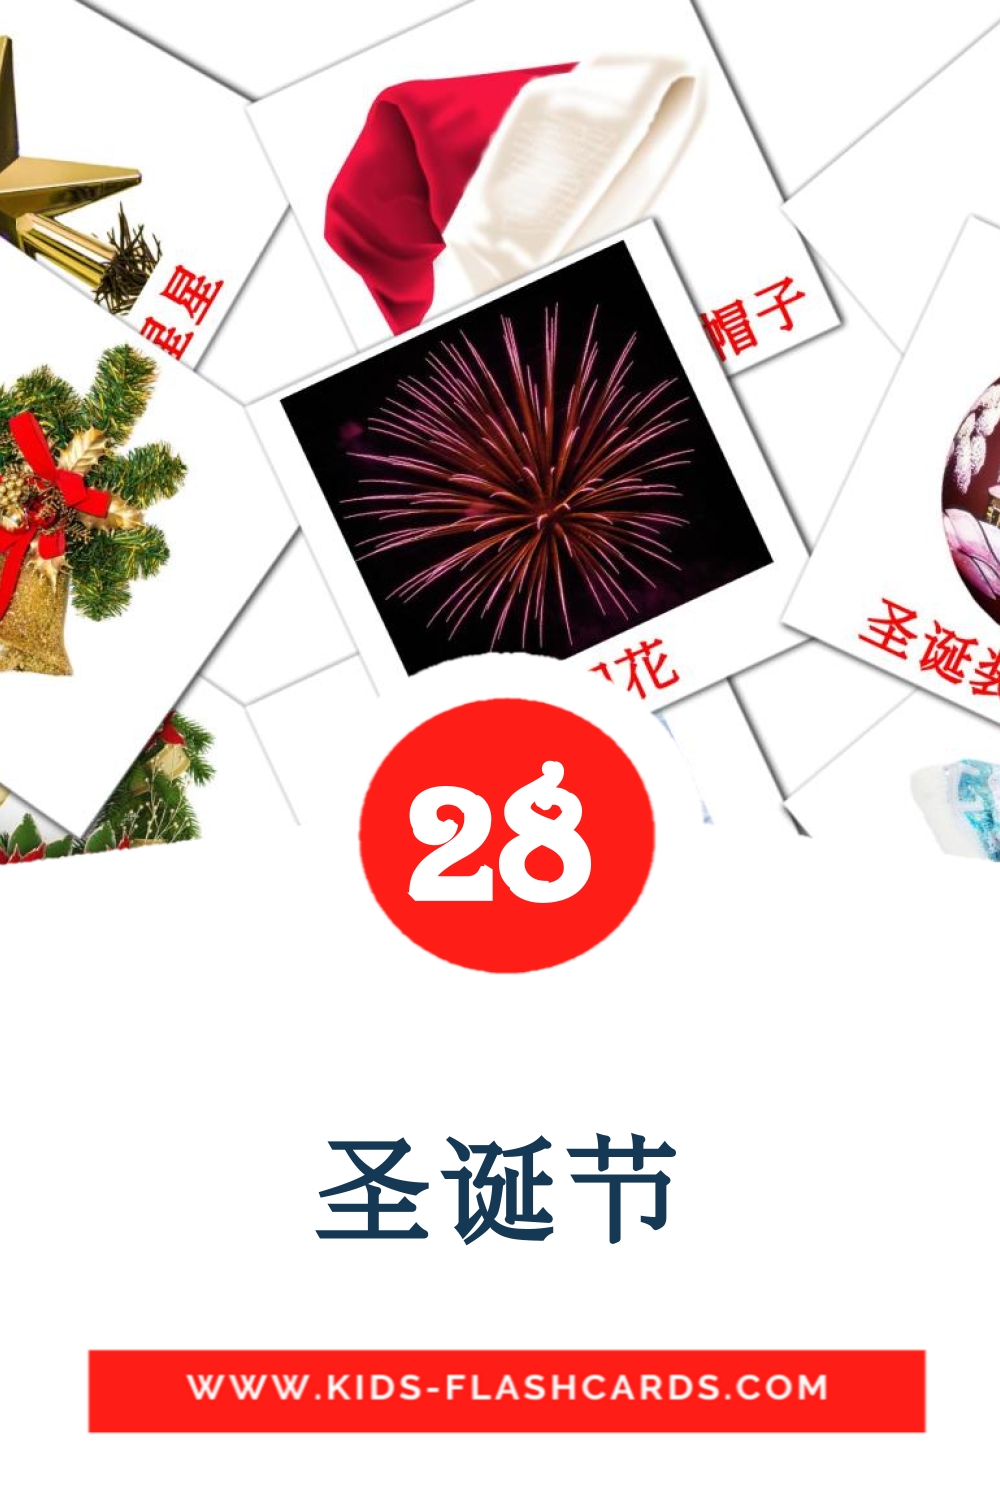 28 圣诞节 Bildkarten für den Kindergarten auf Chinesisch(Vereinfacht)